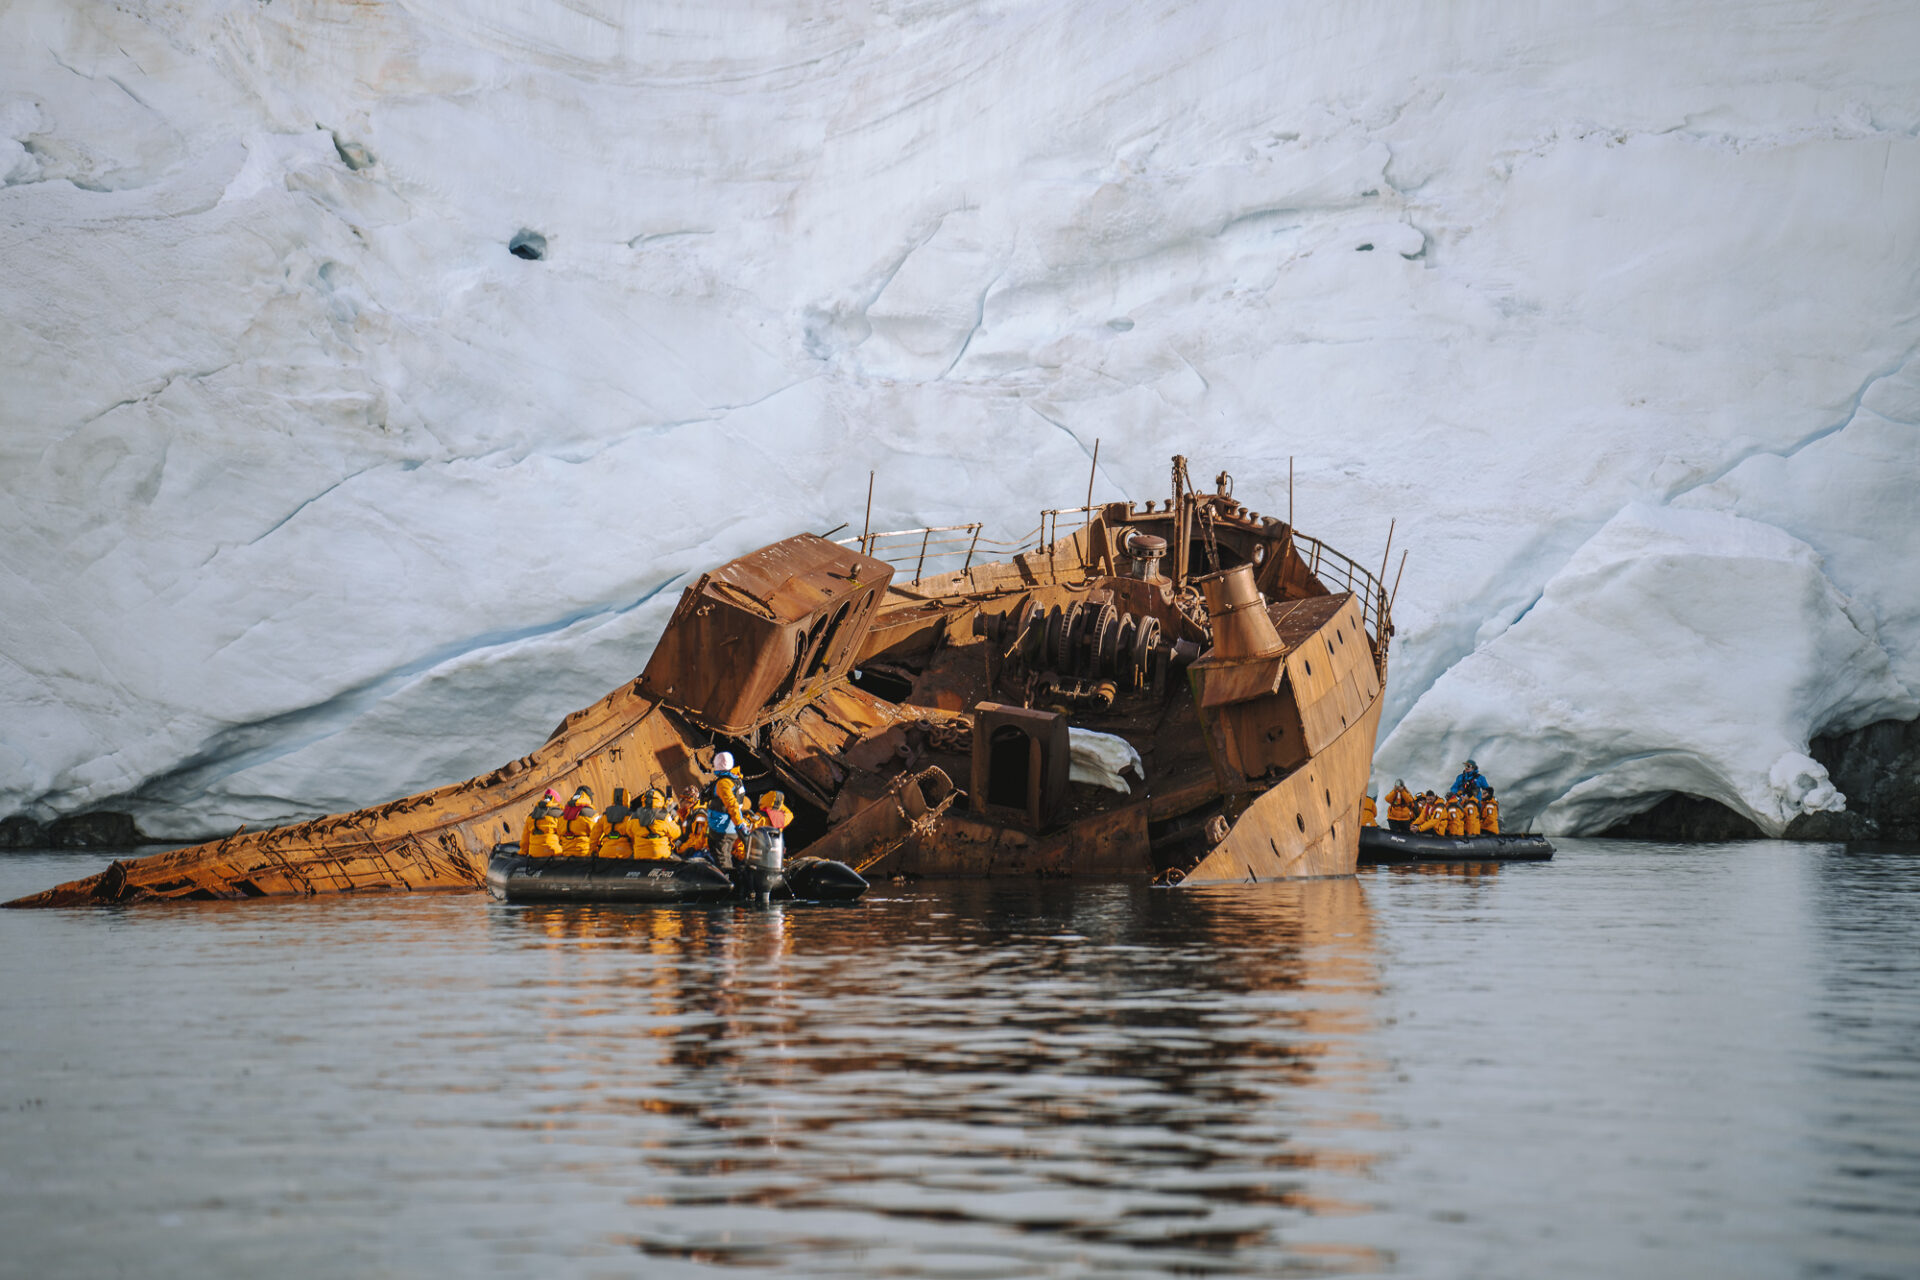 Shipwreck viewing in Antarctica